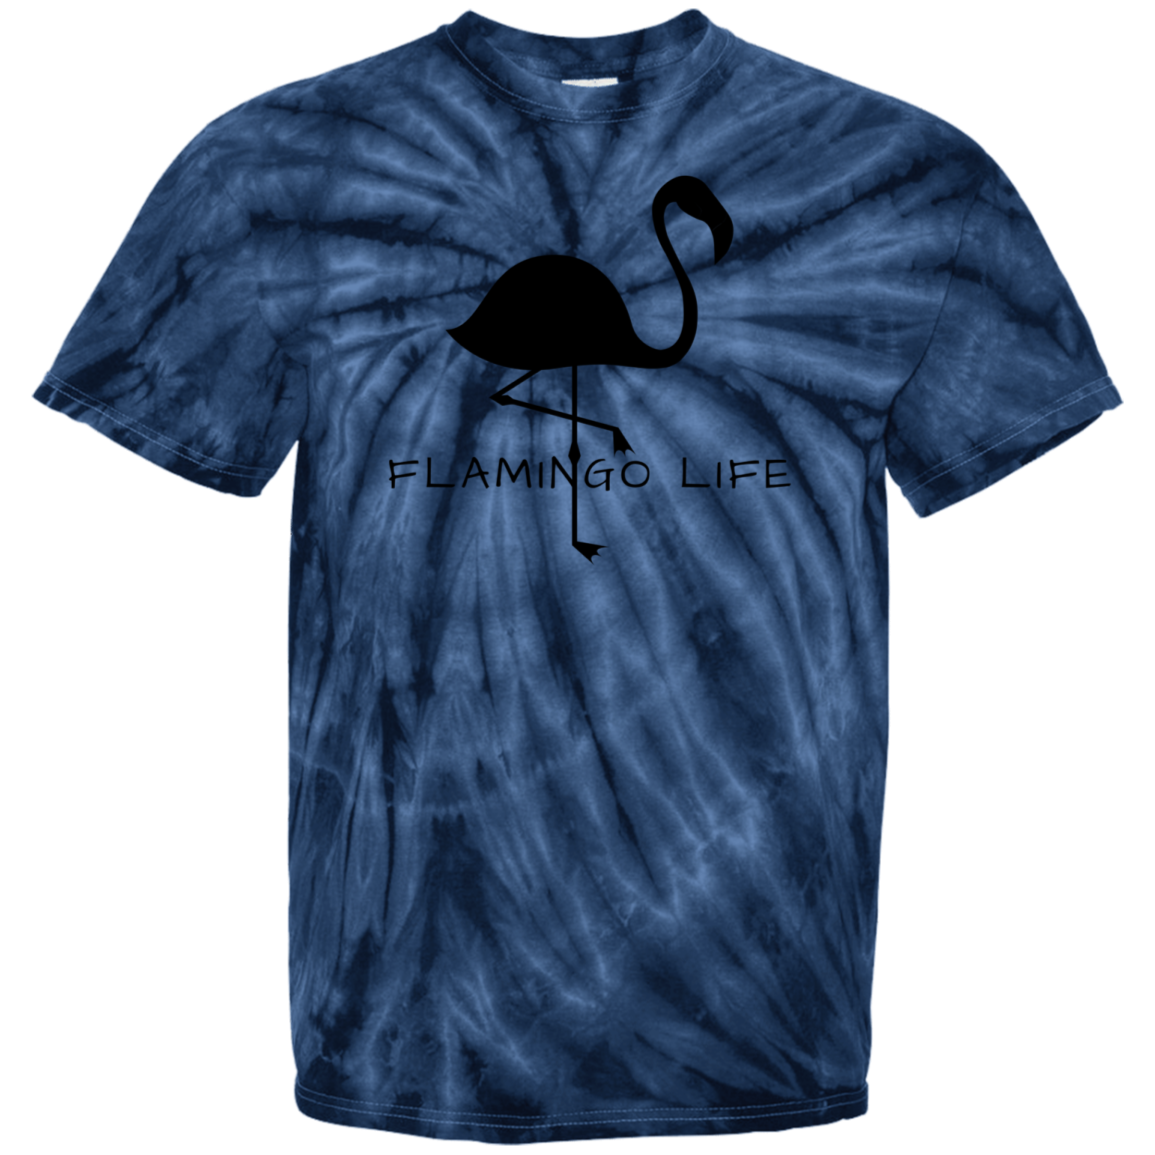 Flamingo Life® Mens 100% Cotton Tie Dye T-Shirt - Sizes up to 5XL